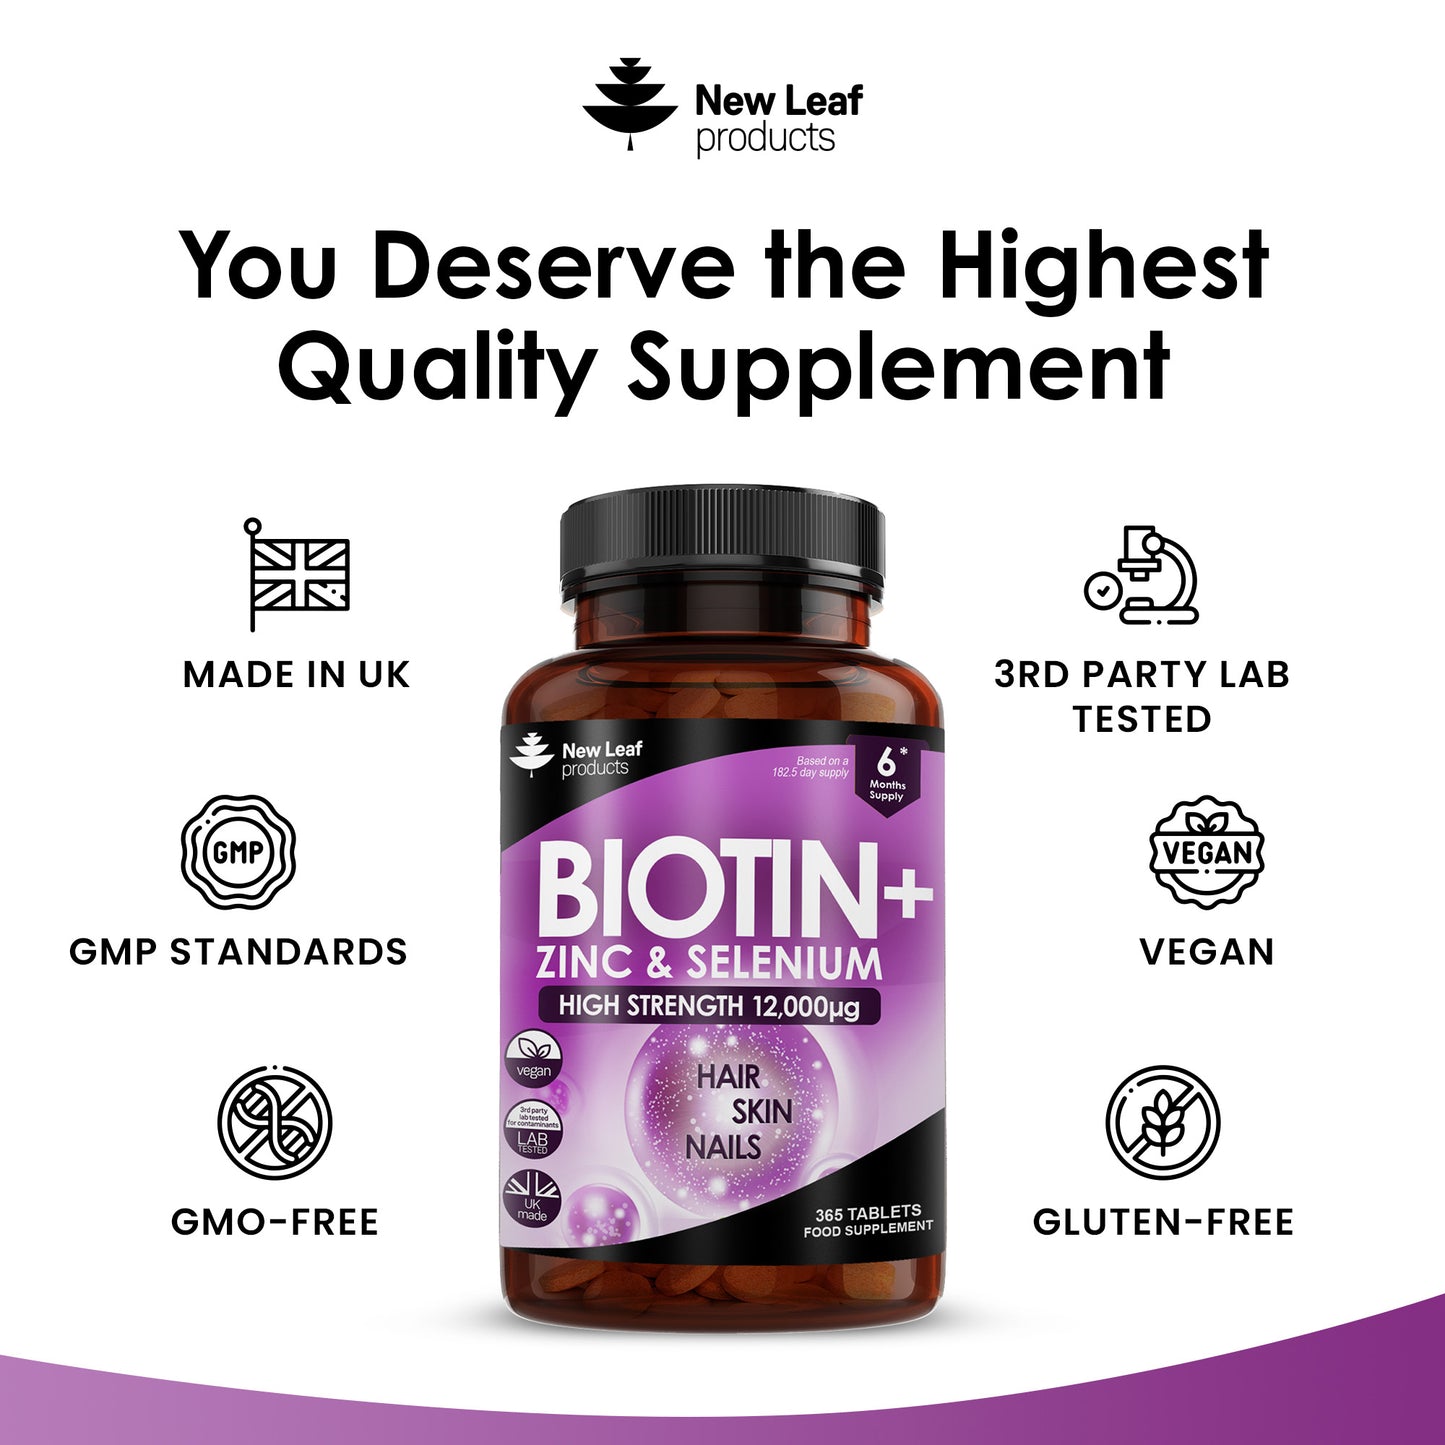 Biotin Hair Growth Vitamins 12,000mcg - Enriched with Zinc & Selenium (6 Months Supply)